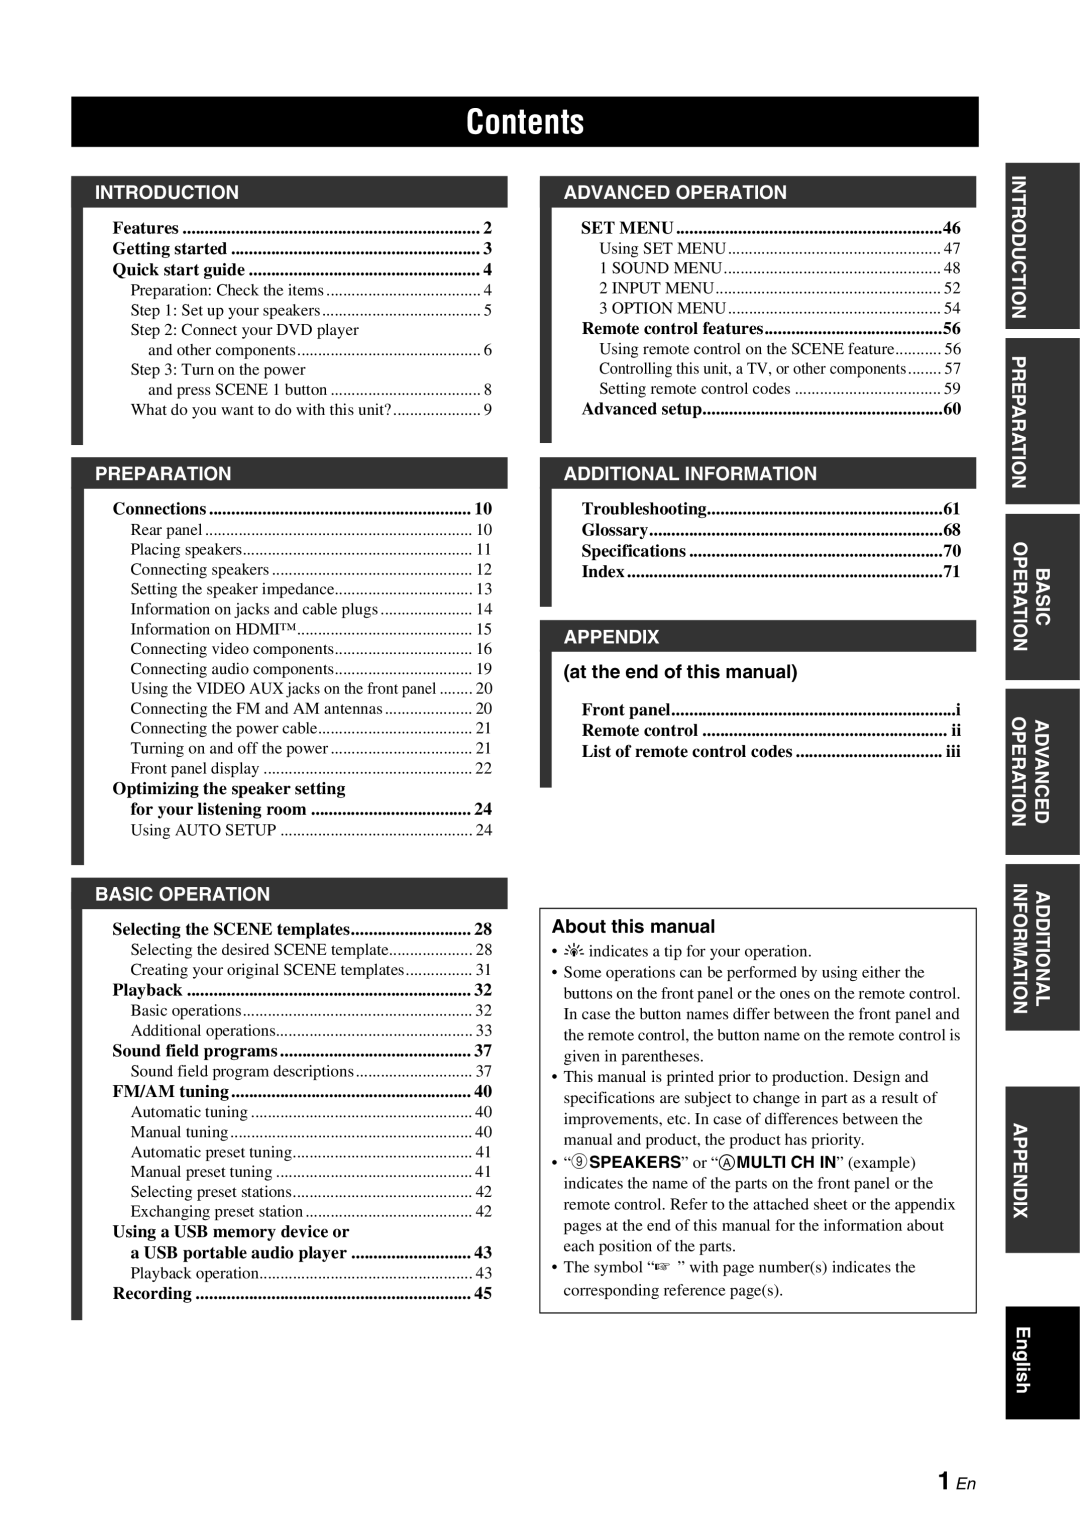 Yamaha RX-V561 owner manual Contents, 1 En 